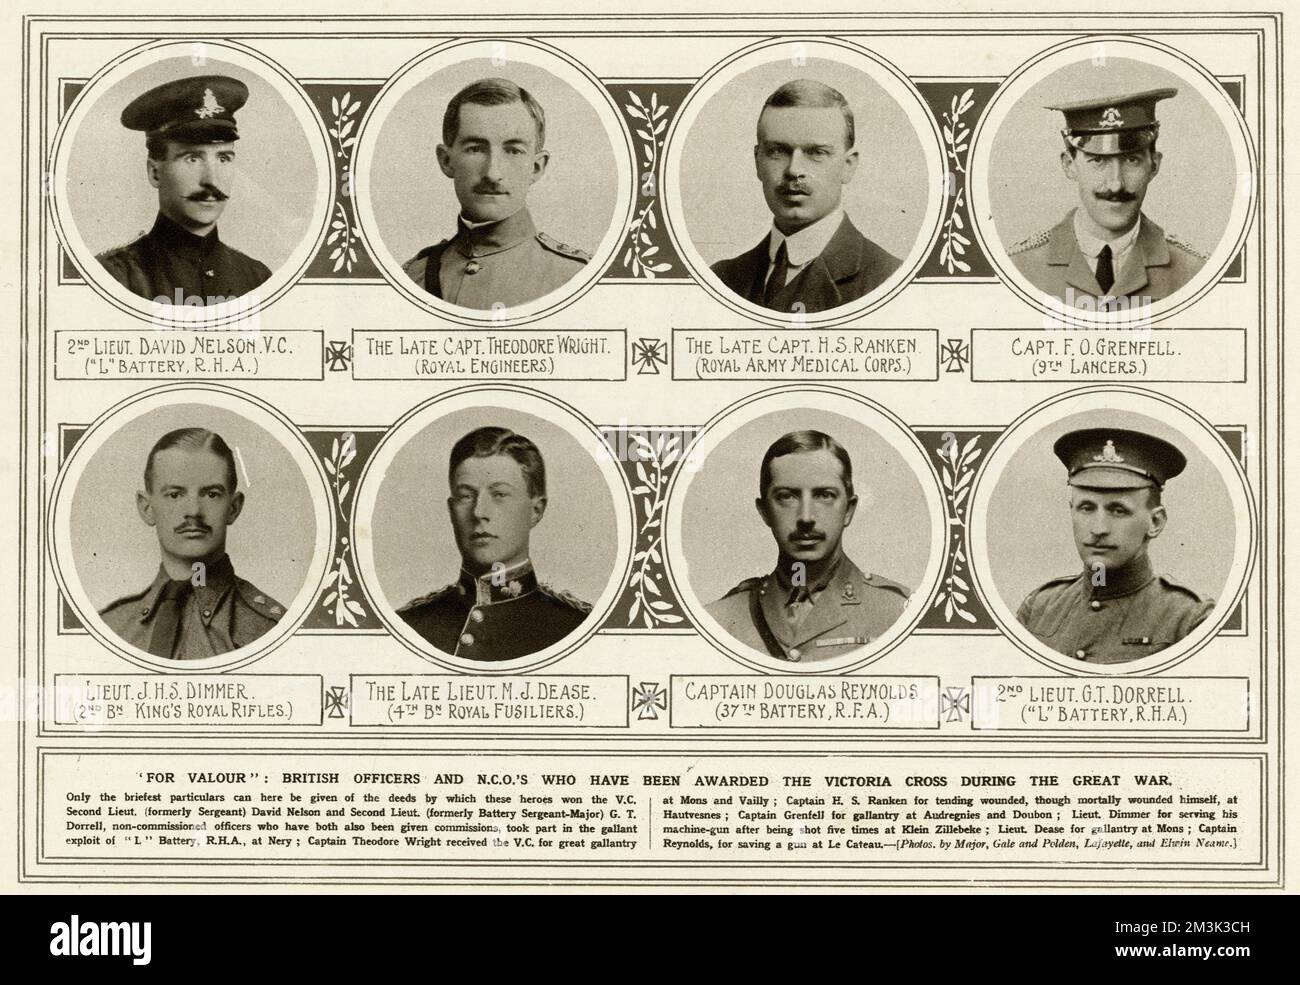 Ufficiali britannici e N.C.o's, che sono stati insigniti di Victoria Cross durante la prima guerra mondiale: Dall'alto a sinistra: 2nd Lieut David Nelson V.C. ('L' Battery, R.H.A); Capt Theodore Wright. (Ingegneri reali); Capt H.S. Ranken (Royal Army Medical Corps); Capt F.O. Grenfell (9th Lancers); Lieut J.H.S. Dimmer (2nd BN King's Royal Rifles); Lieut M.J. Dease (4th BN Royal Fusiliers); Capt Douglas Reynolds (37th batteria, R.F.A); 2nd Lieut G.T. Dorrell ('L' Battery, R.H.A.) 1914 Foto Stock